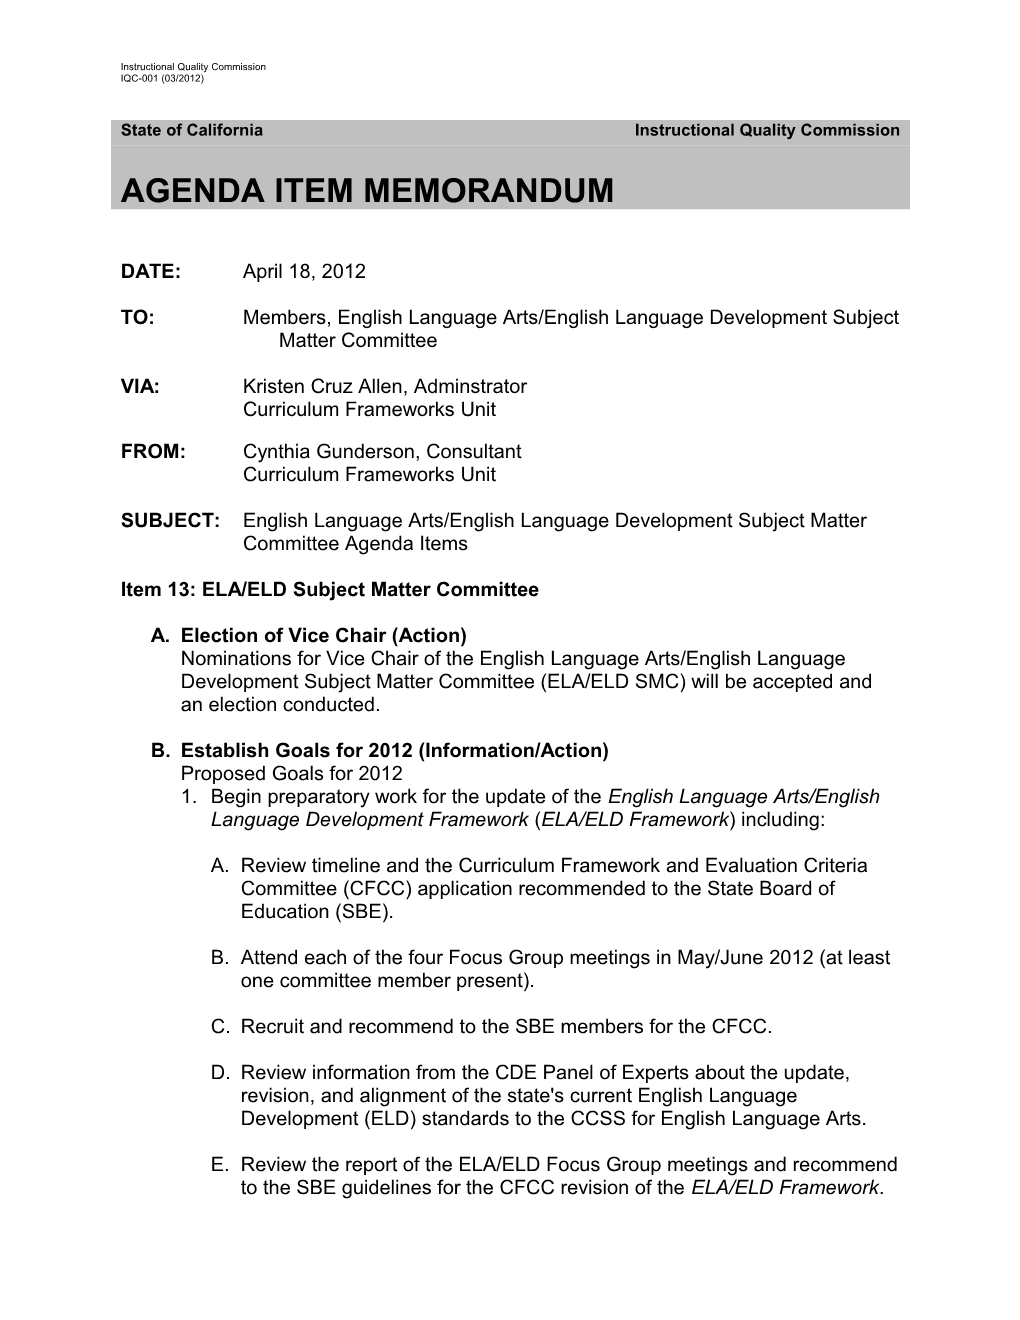 Agenda Item 13 Memo April 18, 2012 - Instructional Quality Commission (CA Dept of Education)